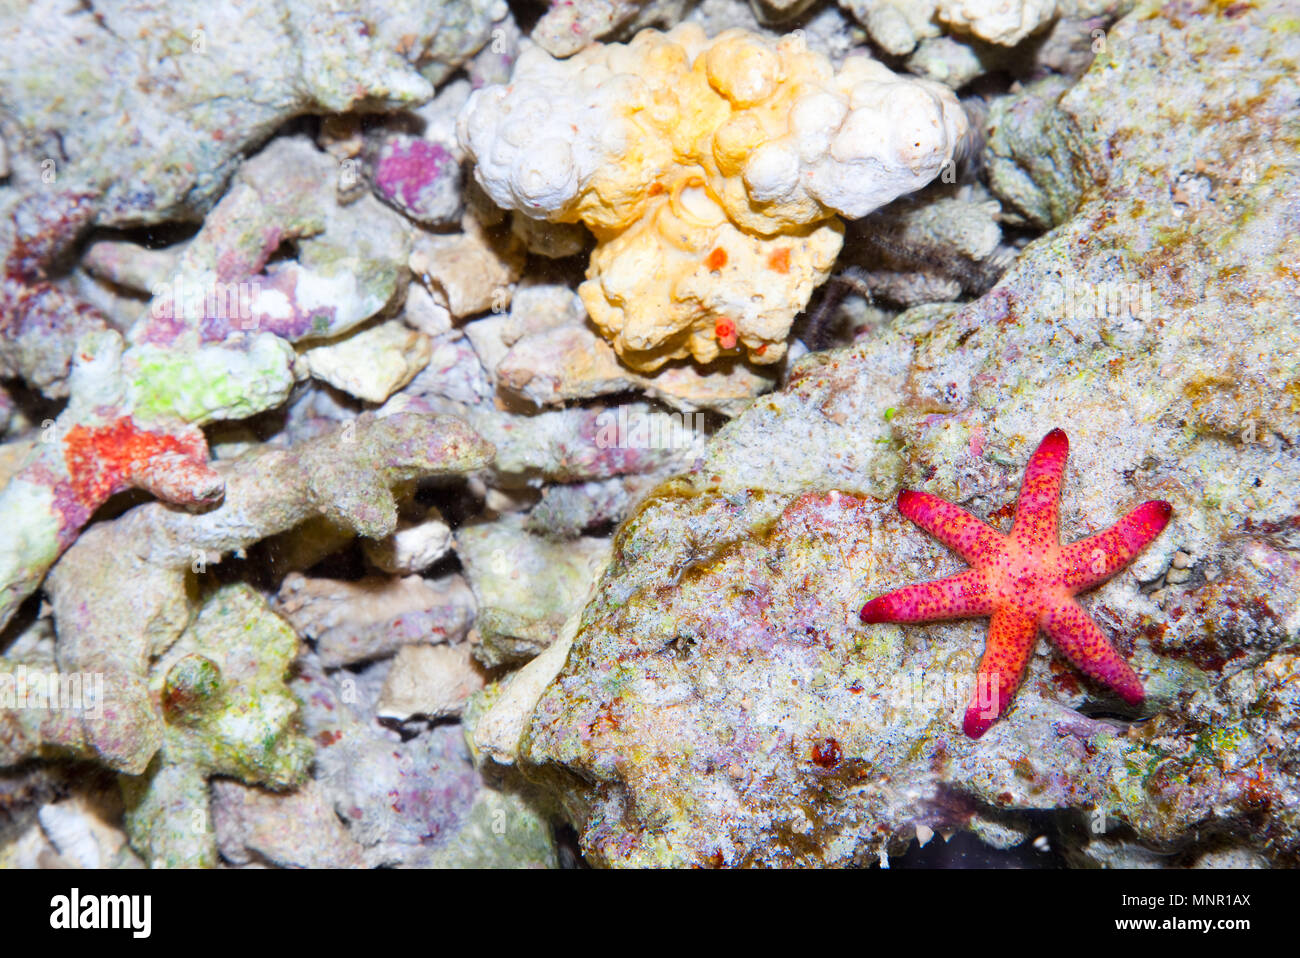 Sea star in the coral reef, Bali sea, Indonesia Stock Photo